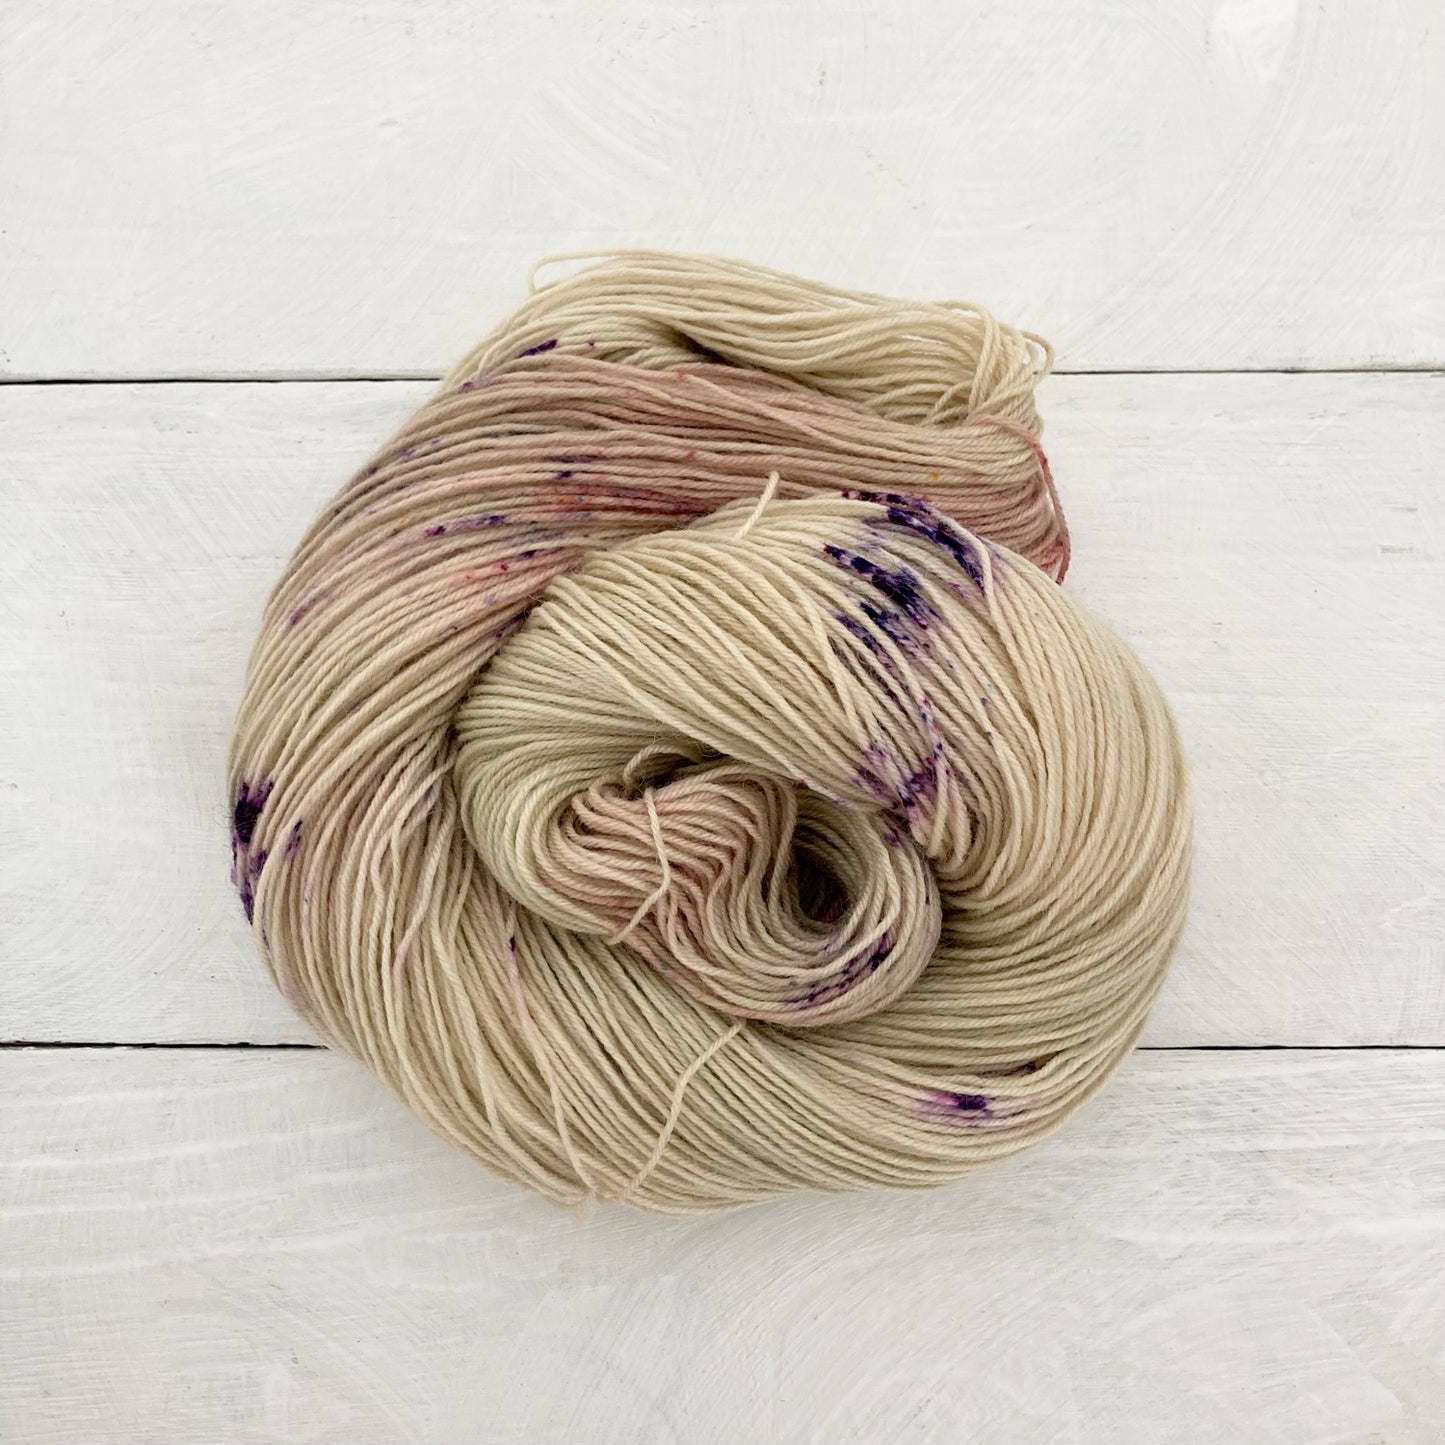 Hand-dyed yarn No.218 sock yarn "Pour un tombeau sans nom"